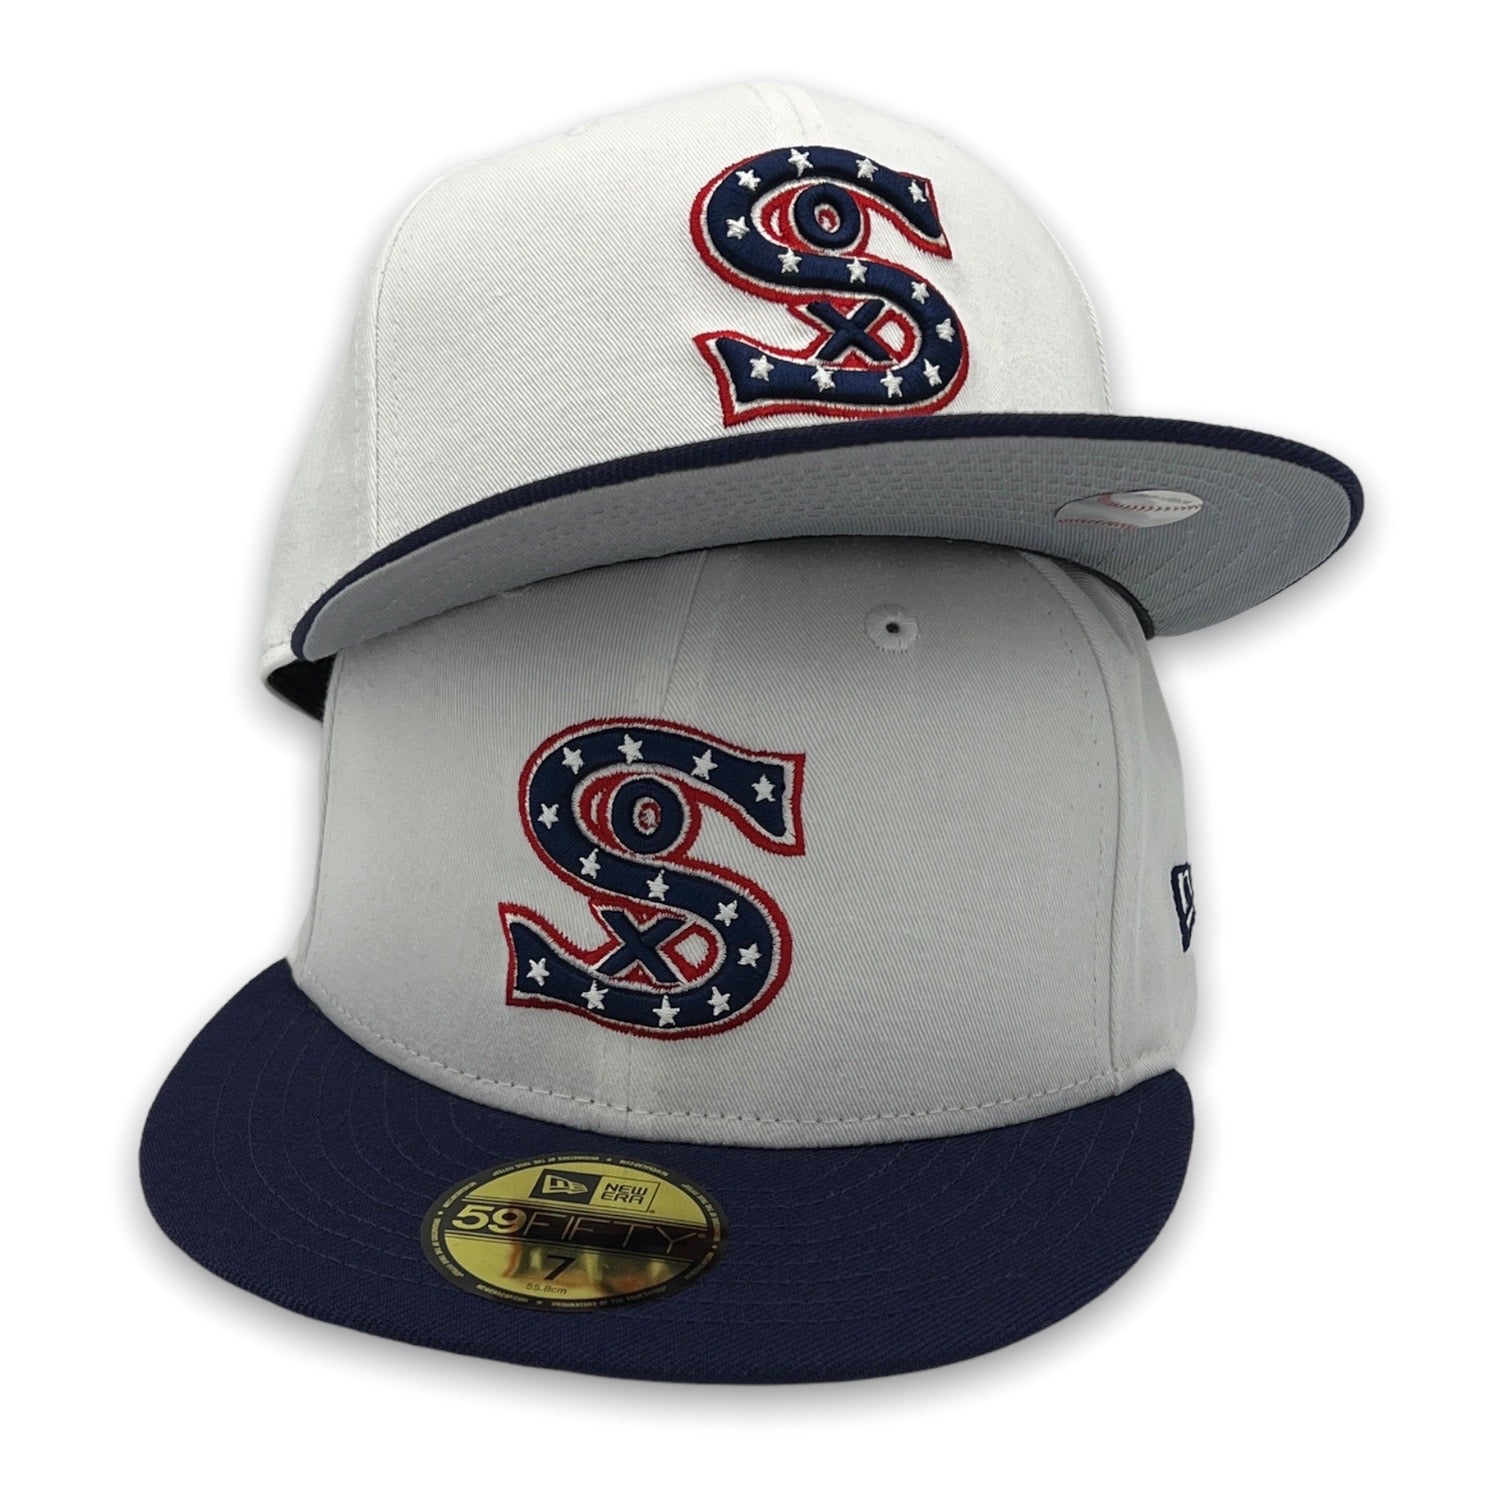 Vintage Chicago White Sox 1917 New Era Pro Model Hat Cap Size 7 5/8